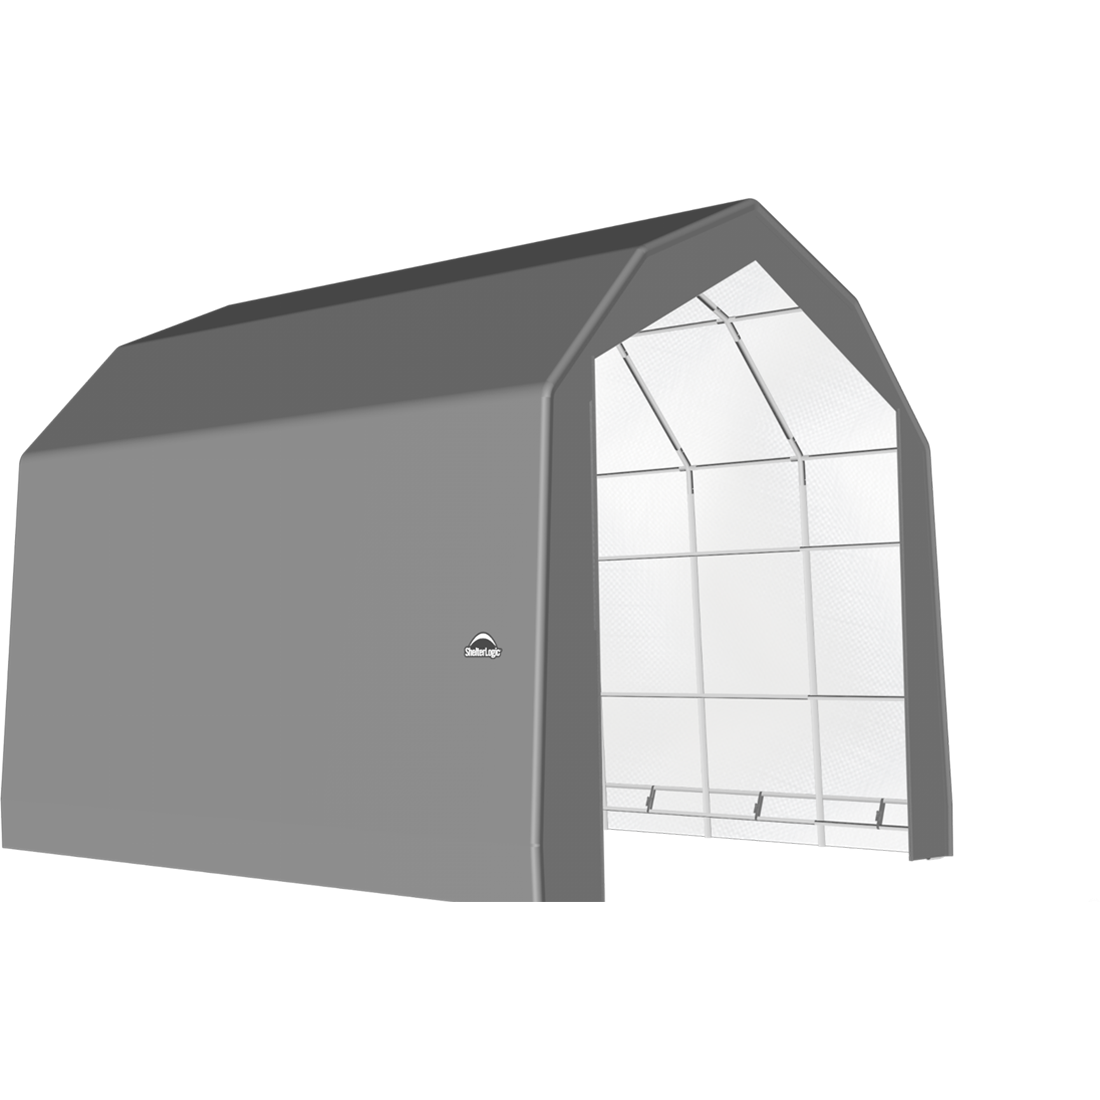 ShelterTech SP Series Barn Shelter, 20 ft. x 24 ft. x 18 ft. Heavy Duty PVC 14.5 oz. Gray